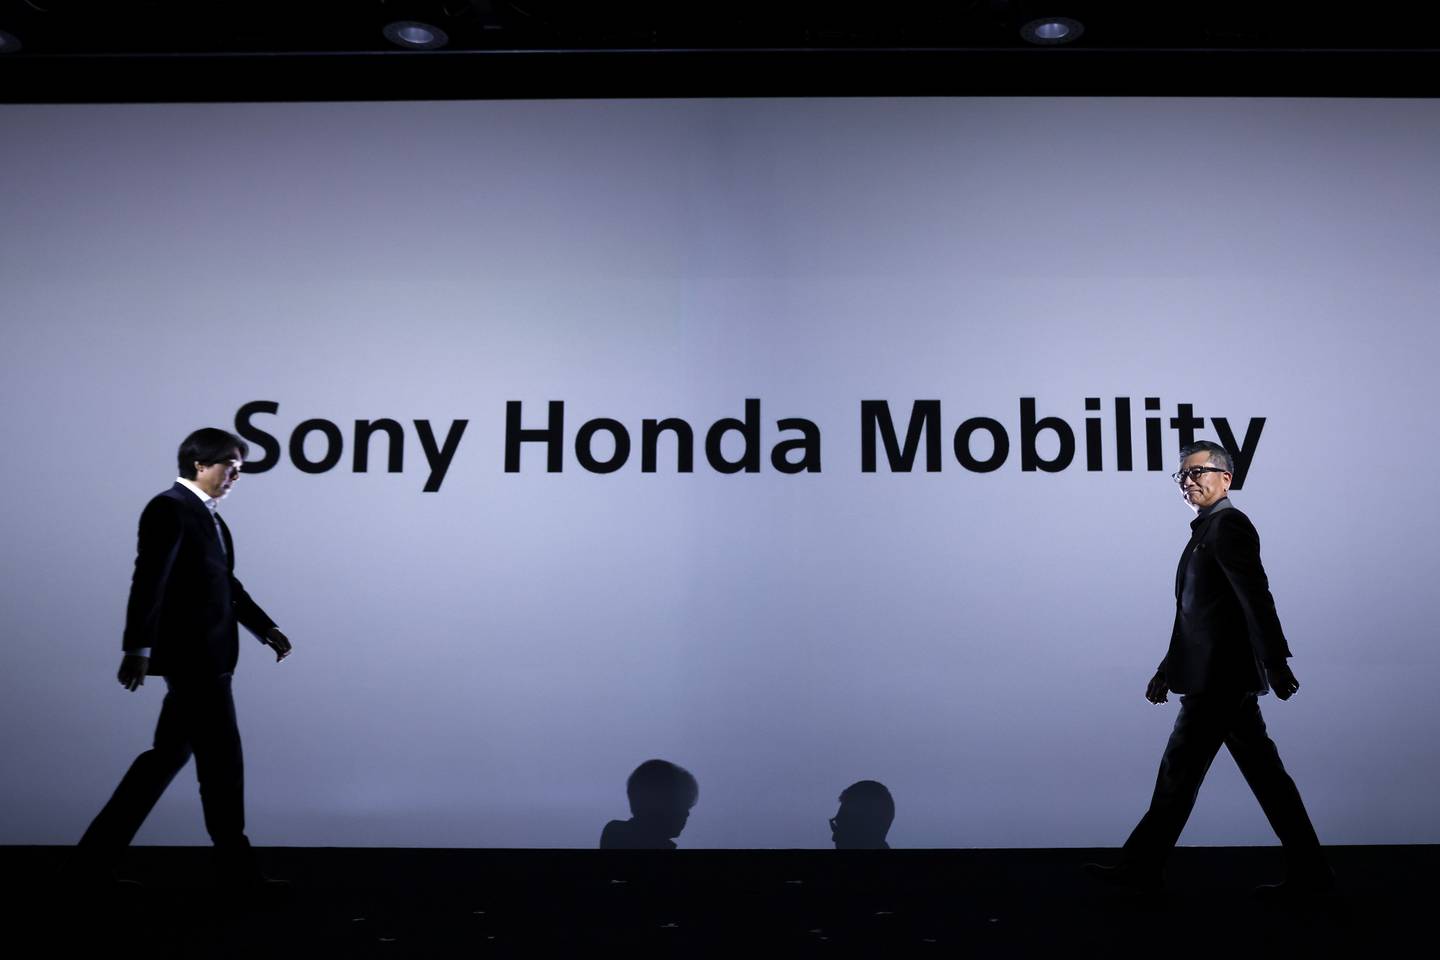 Ejecutivos de Sony Honda Mobility, Yasuhide Mizuno e Izumi Kawanishi en el escenario